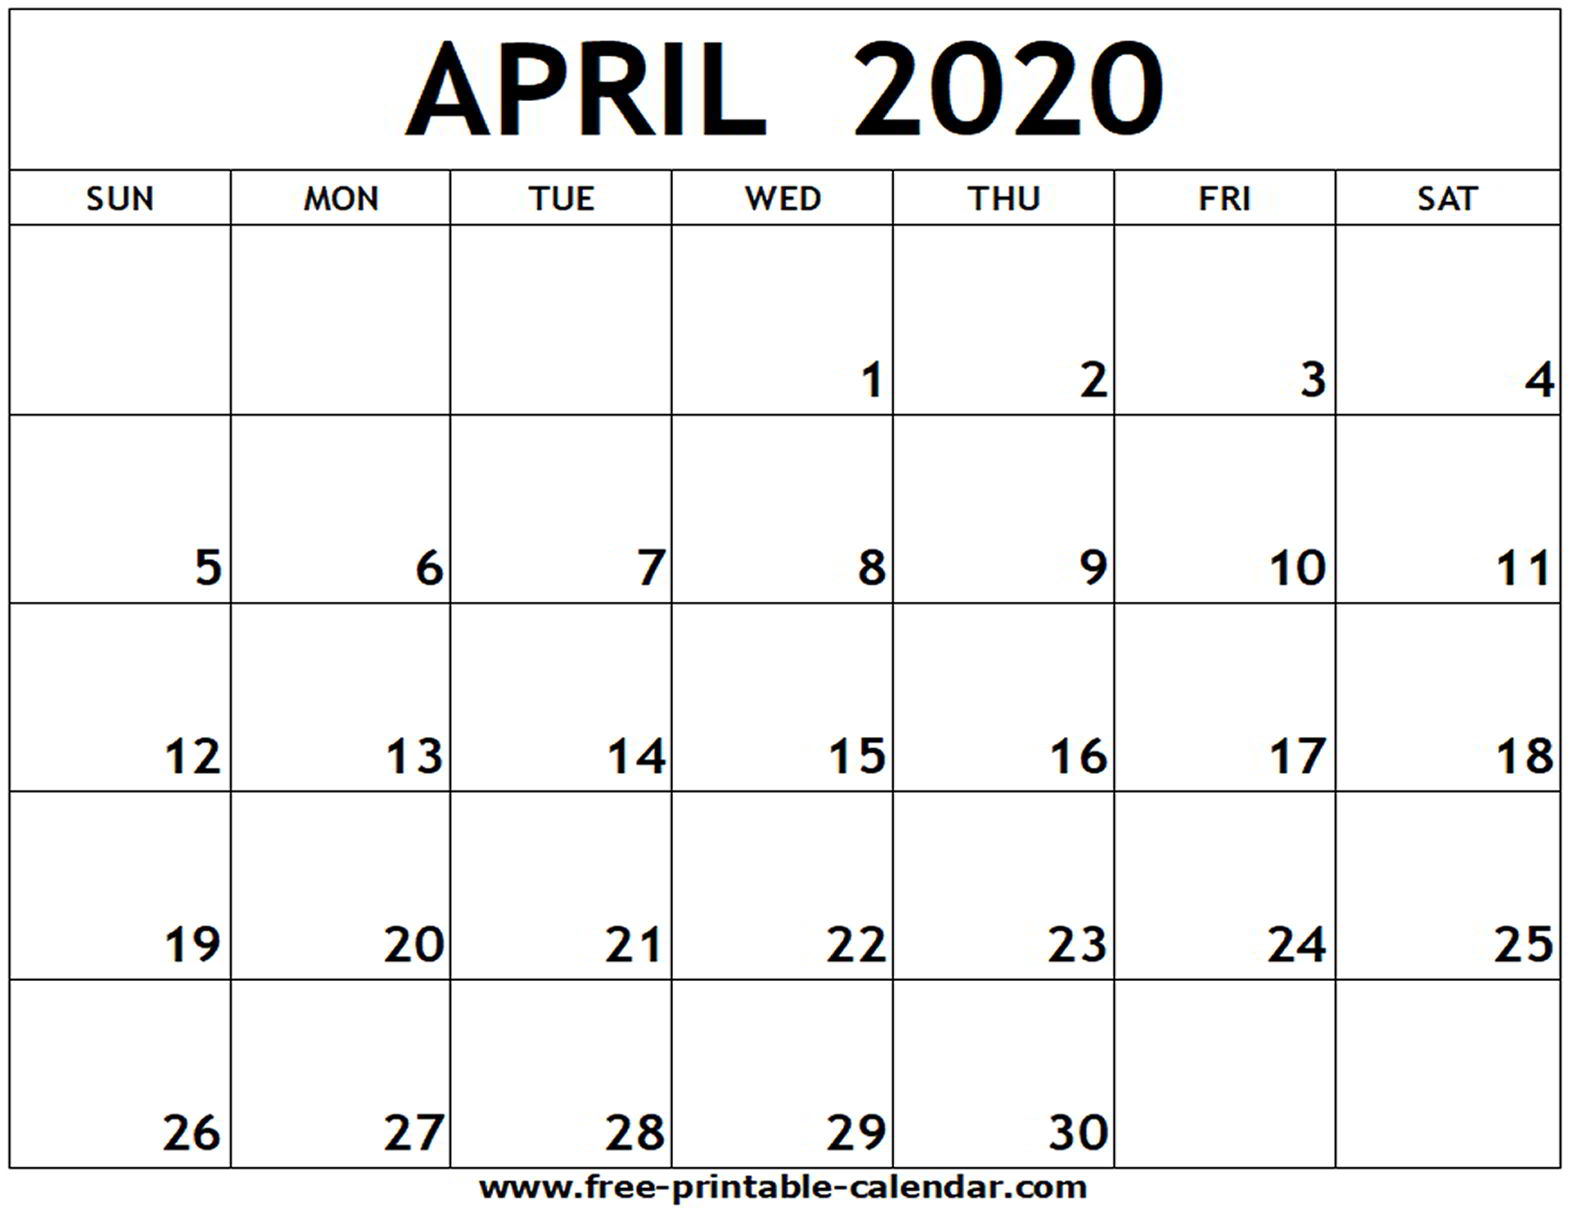 Free Printable Calendar April 2020 - Wpa.wpart.co